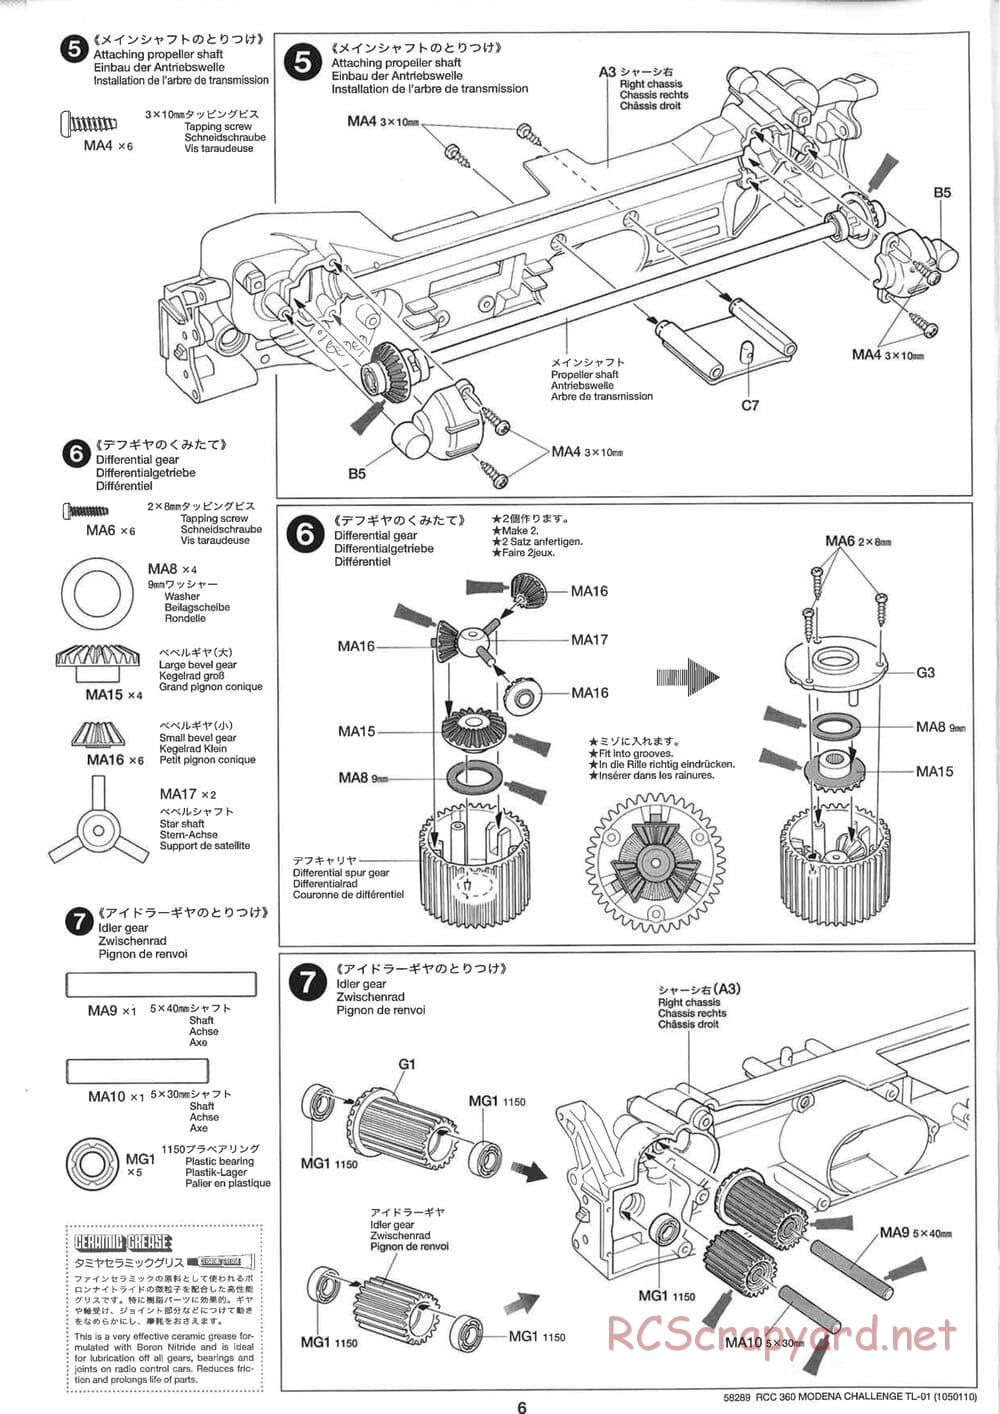 Tamiya - Ferrari 360 Modena Challenge - TL-01 Chassis - Manual - Page 6